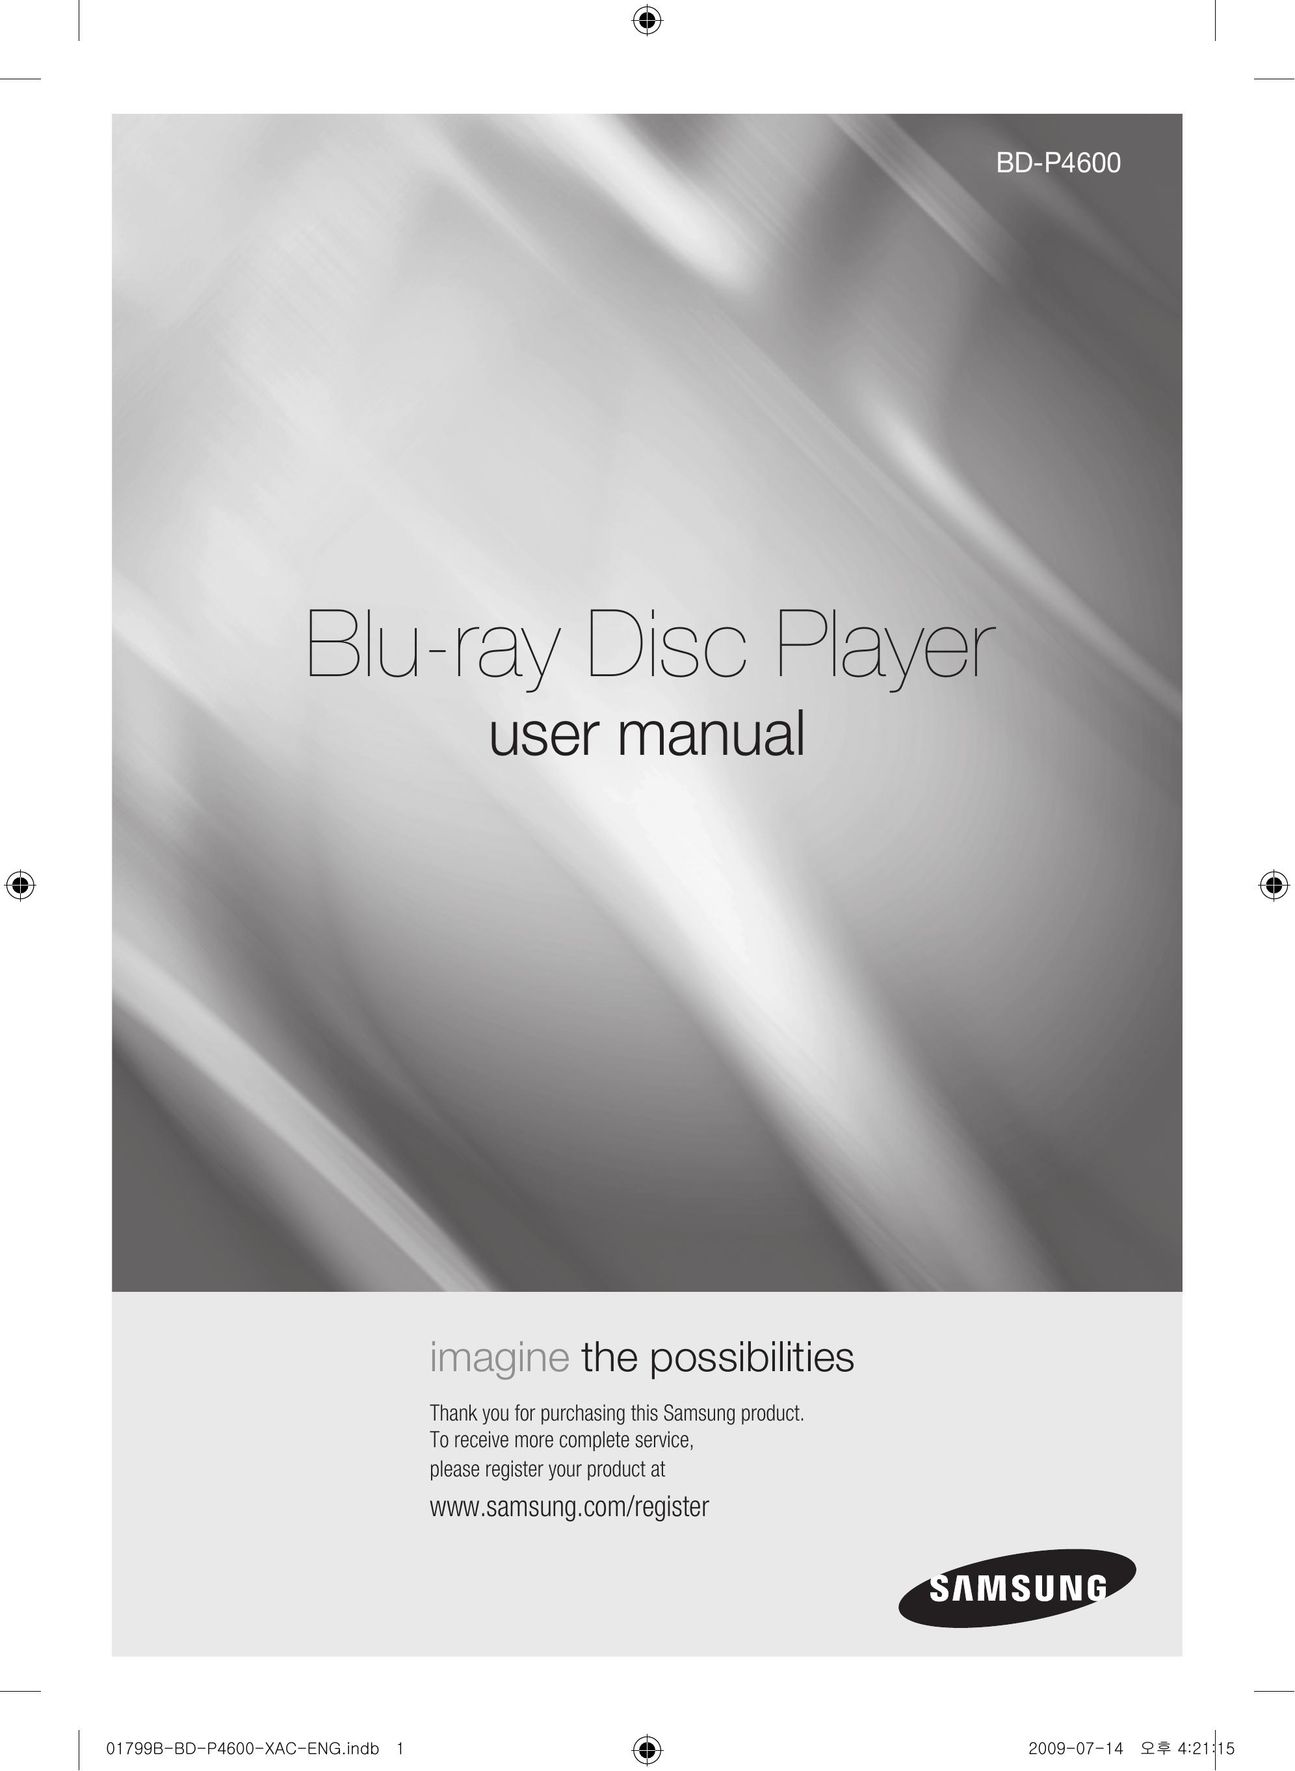 Samsung BD-P4600 DVD Player User Manual